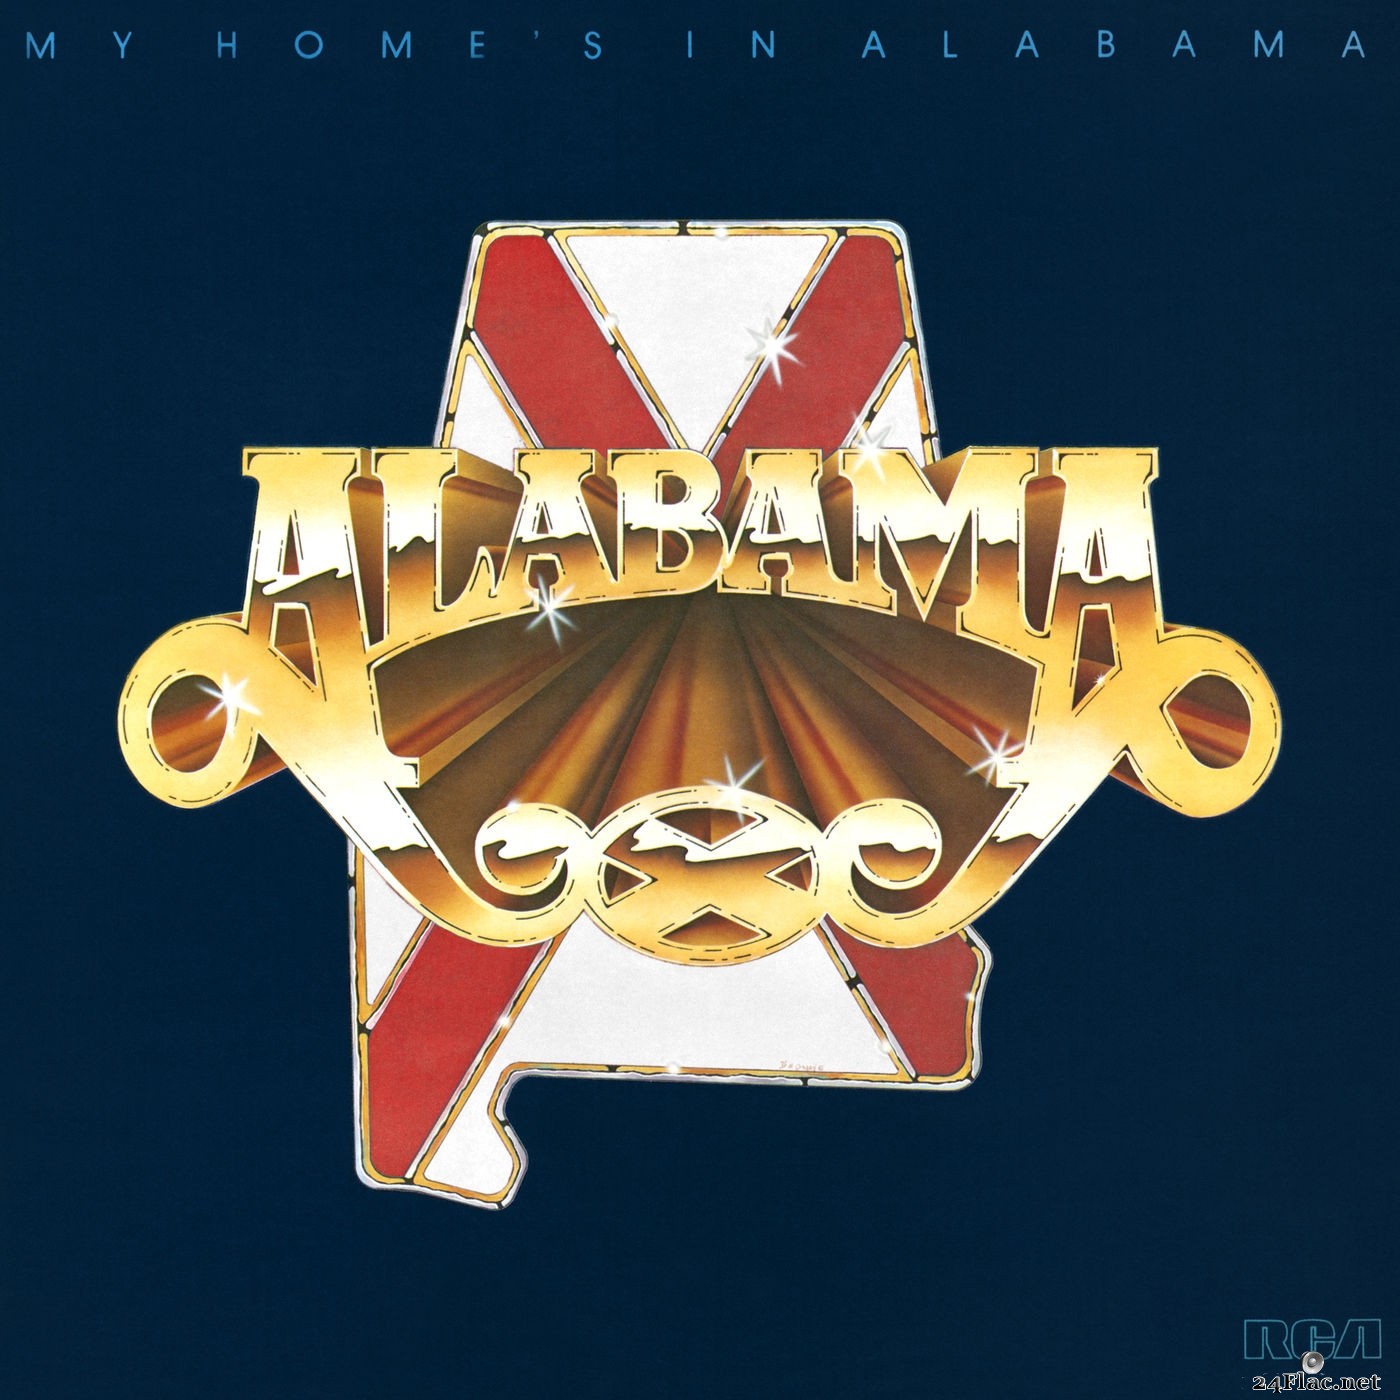 Alabama - My Home's in Alabama (2016) Hi-Res